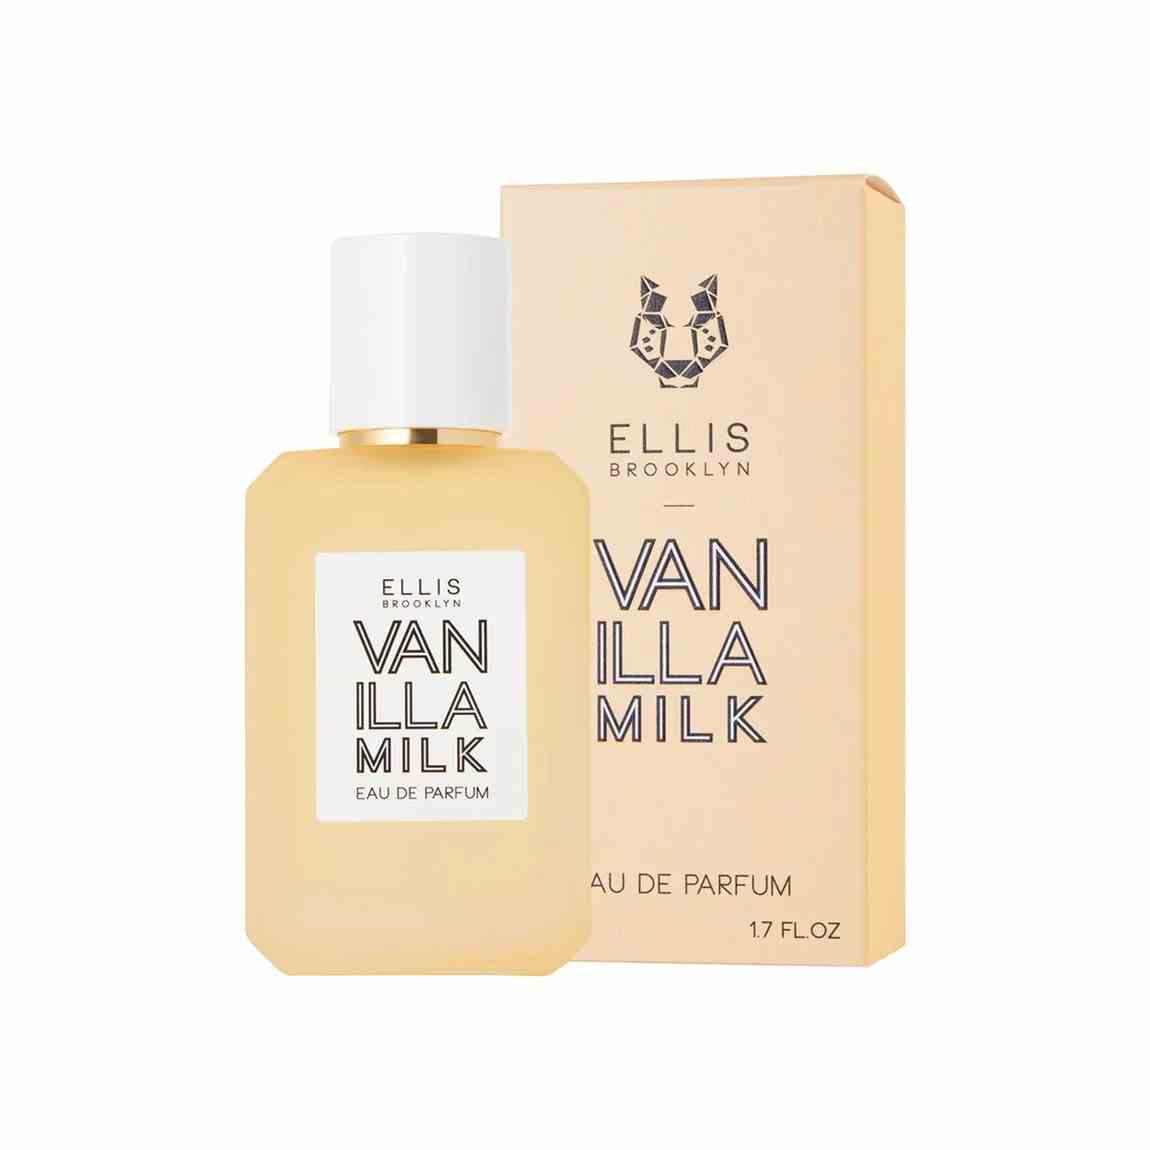 Vanilla Milk Eau de Parfum yellow bottle of perfume with yellow box on white background